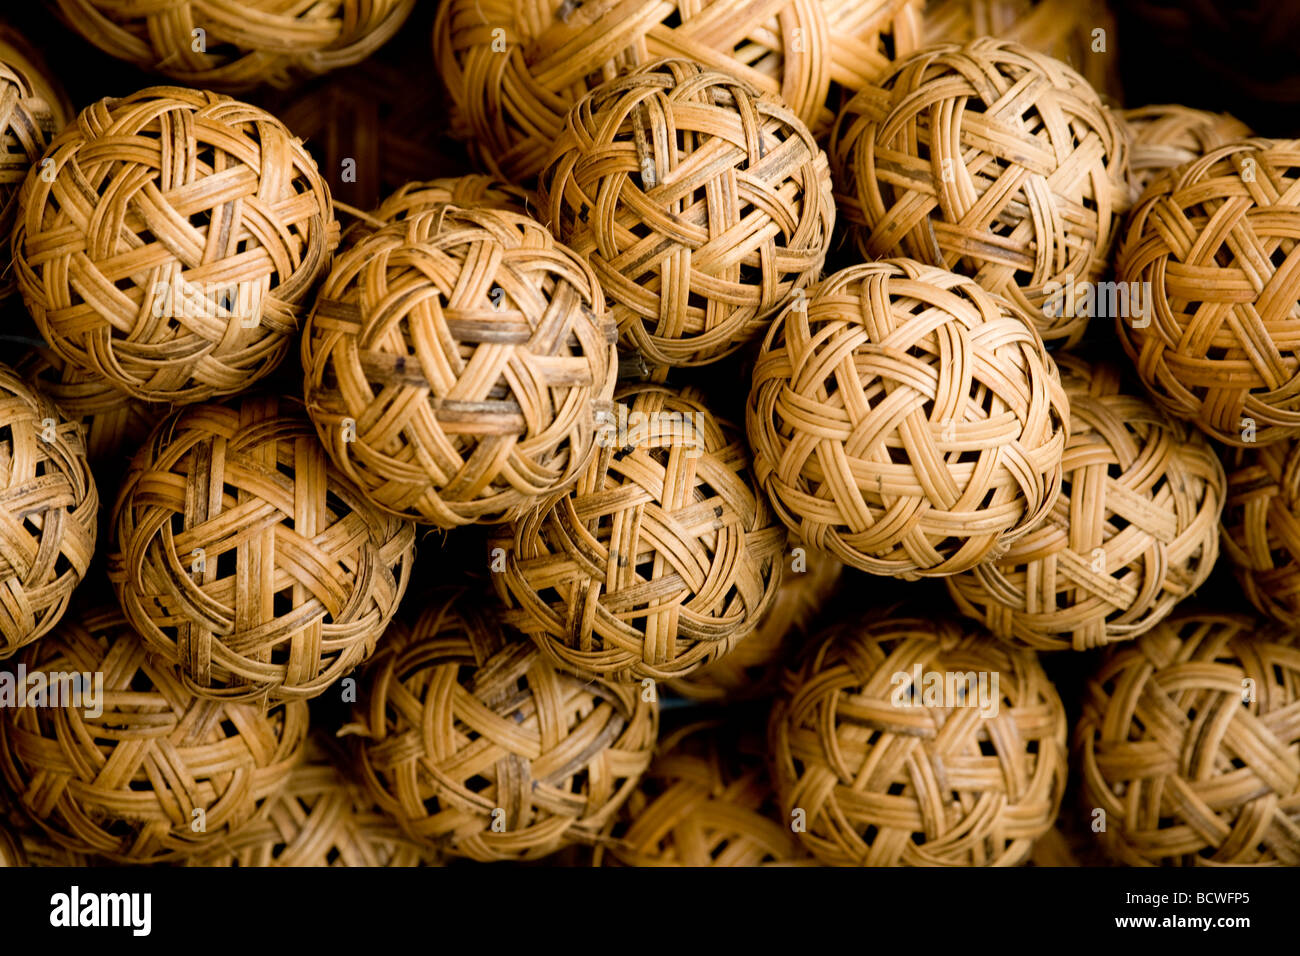 Sepak takraw balls hi-res stock photography and images - Alamy